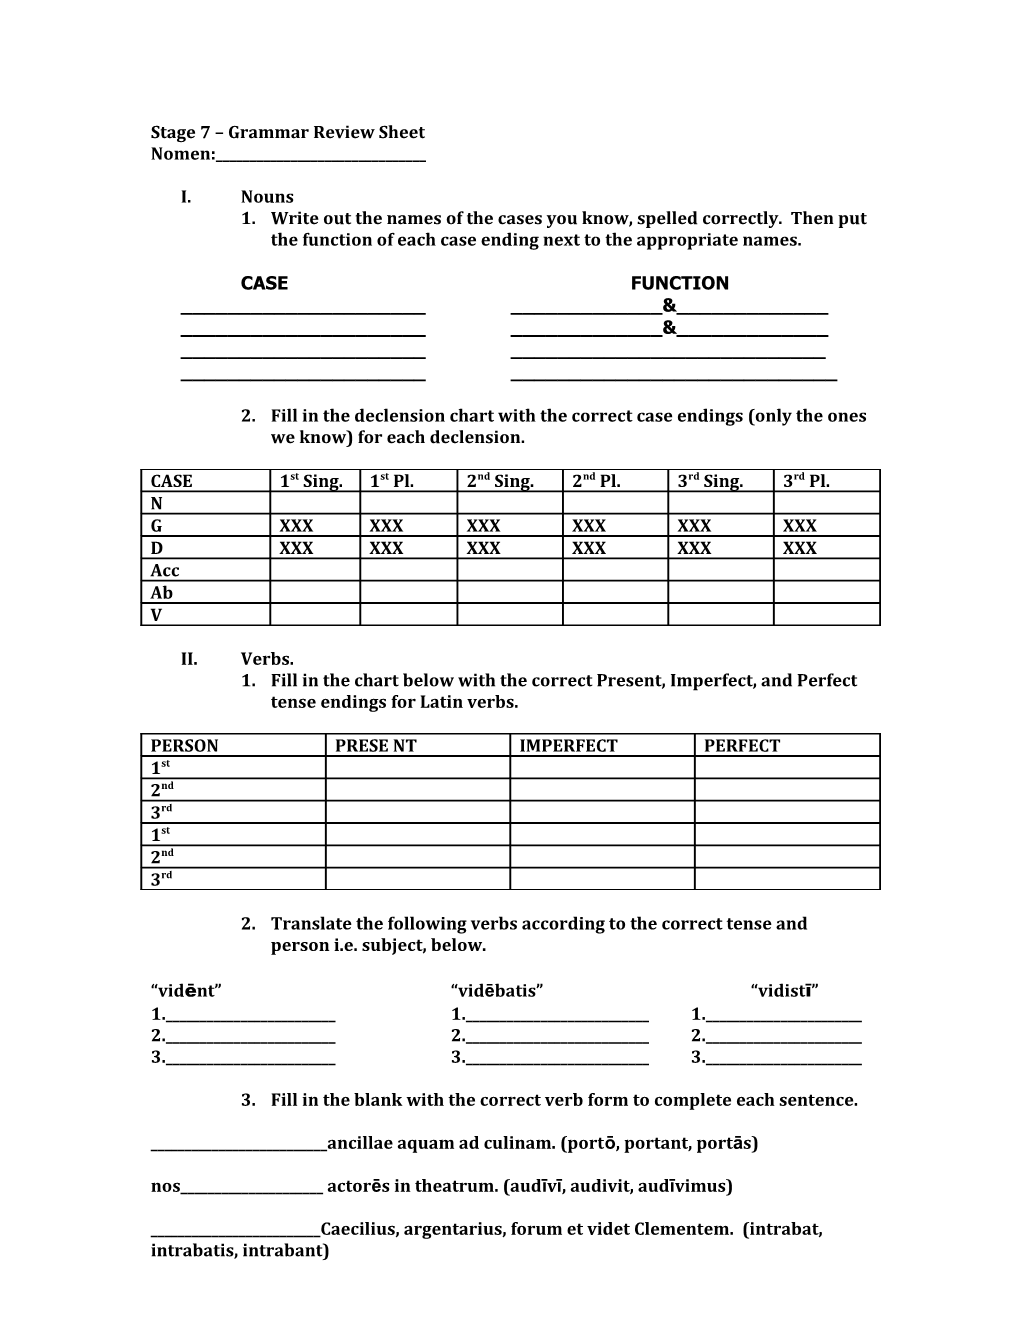 Stage 7 Grammar Review Sheet